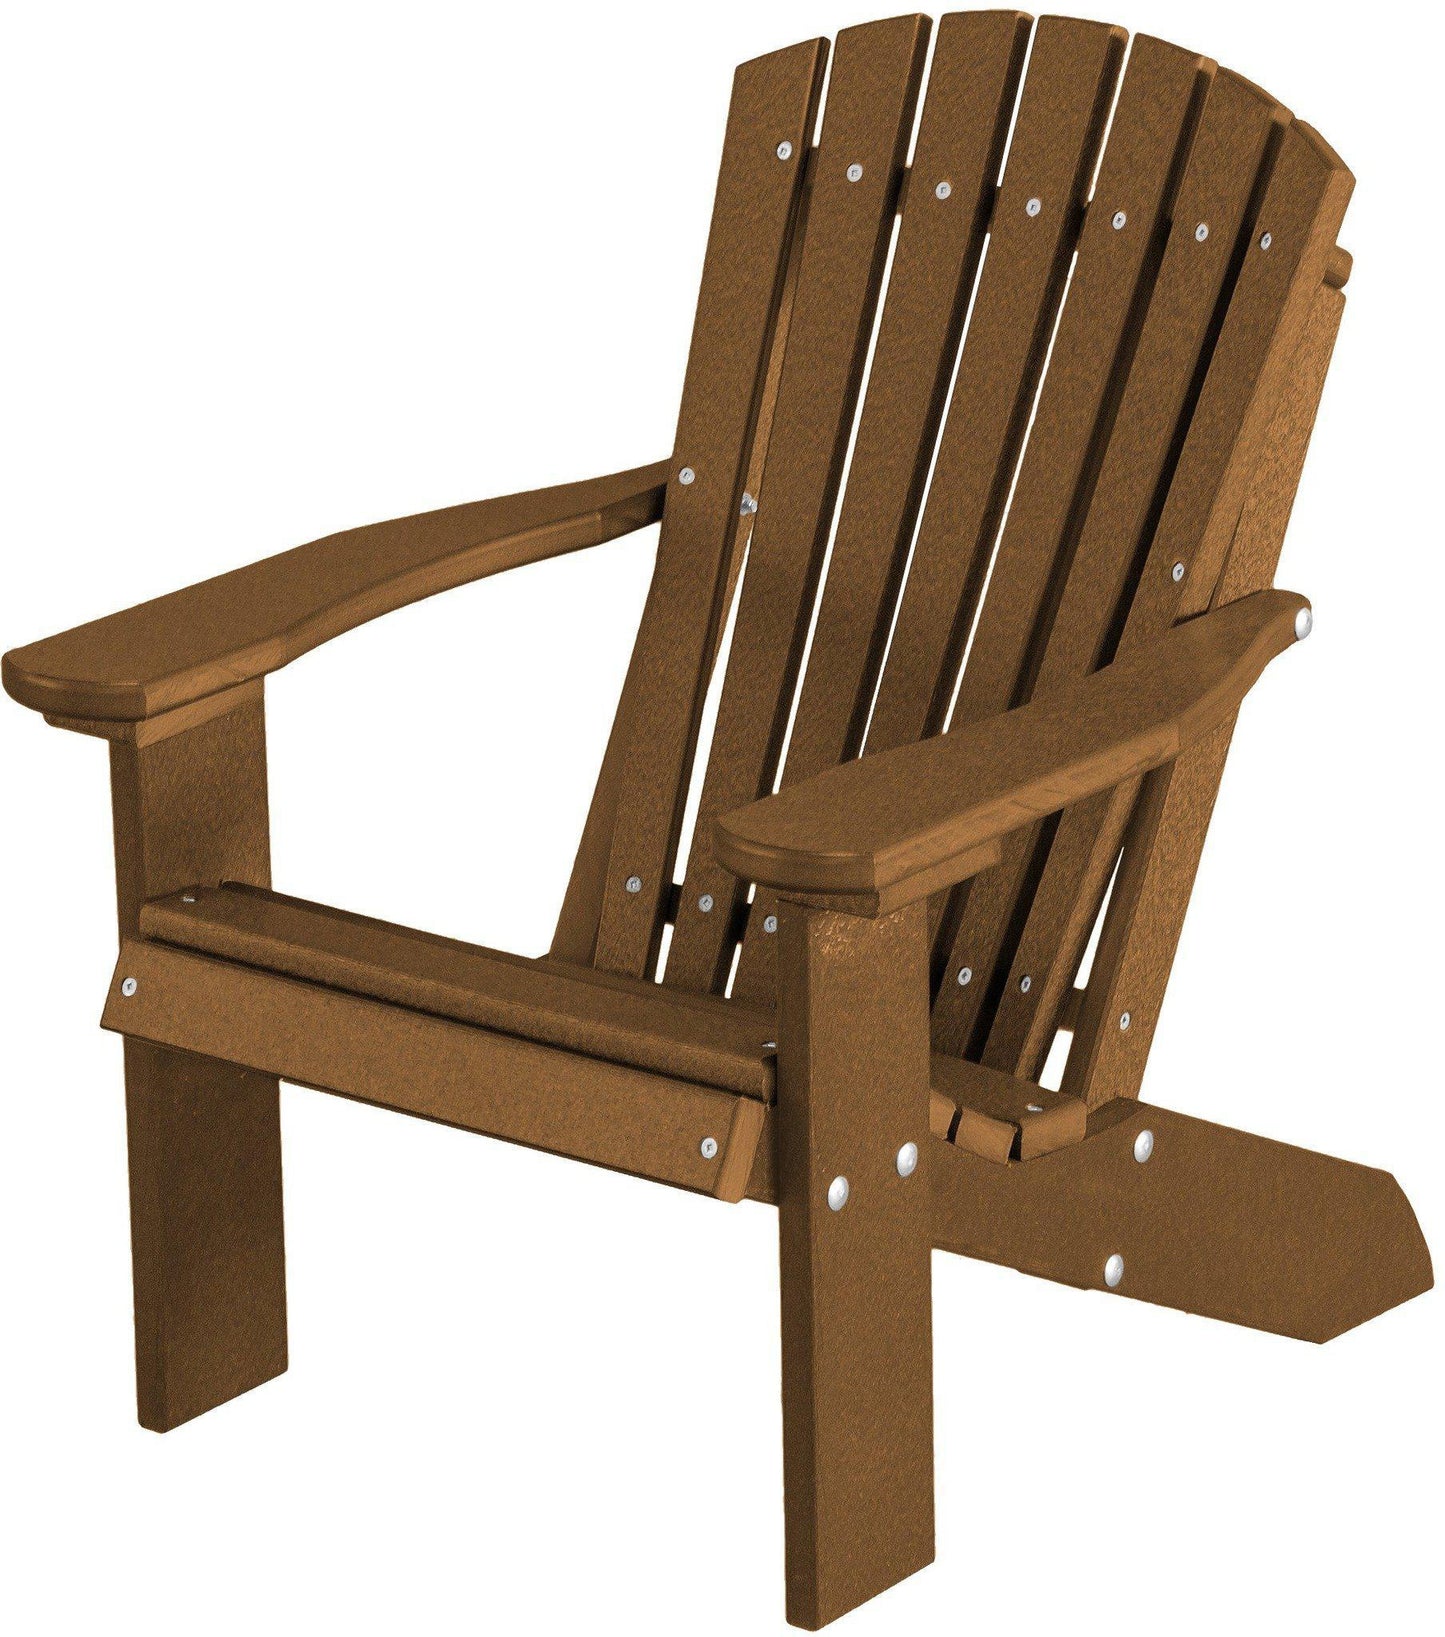 wildridge outdoor recycled plastic children's adirondack chair tudor brown